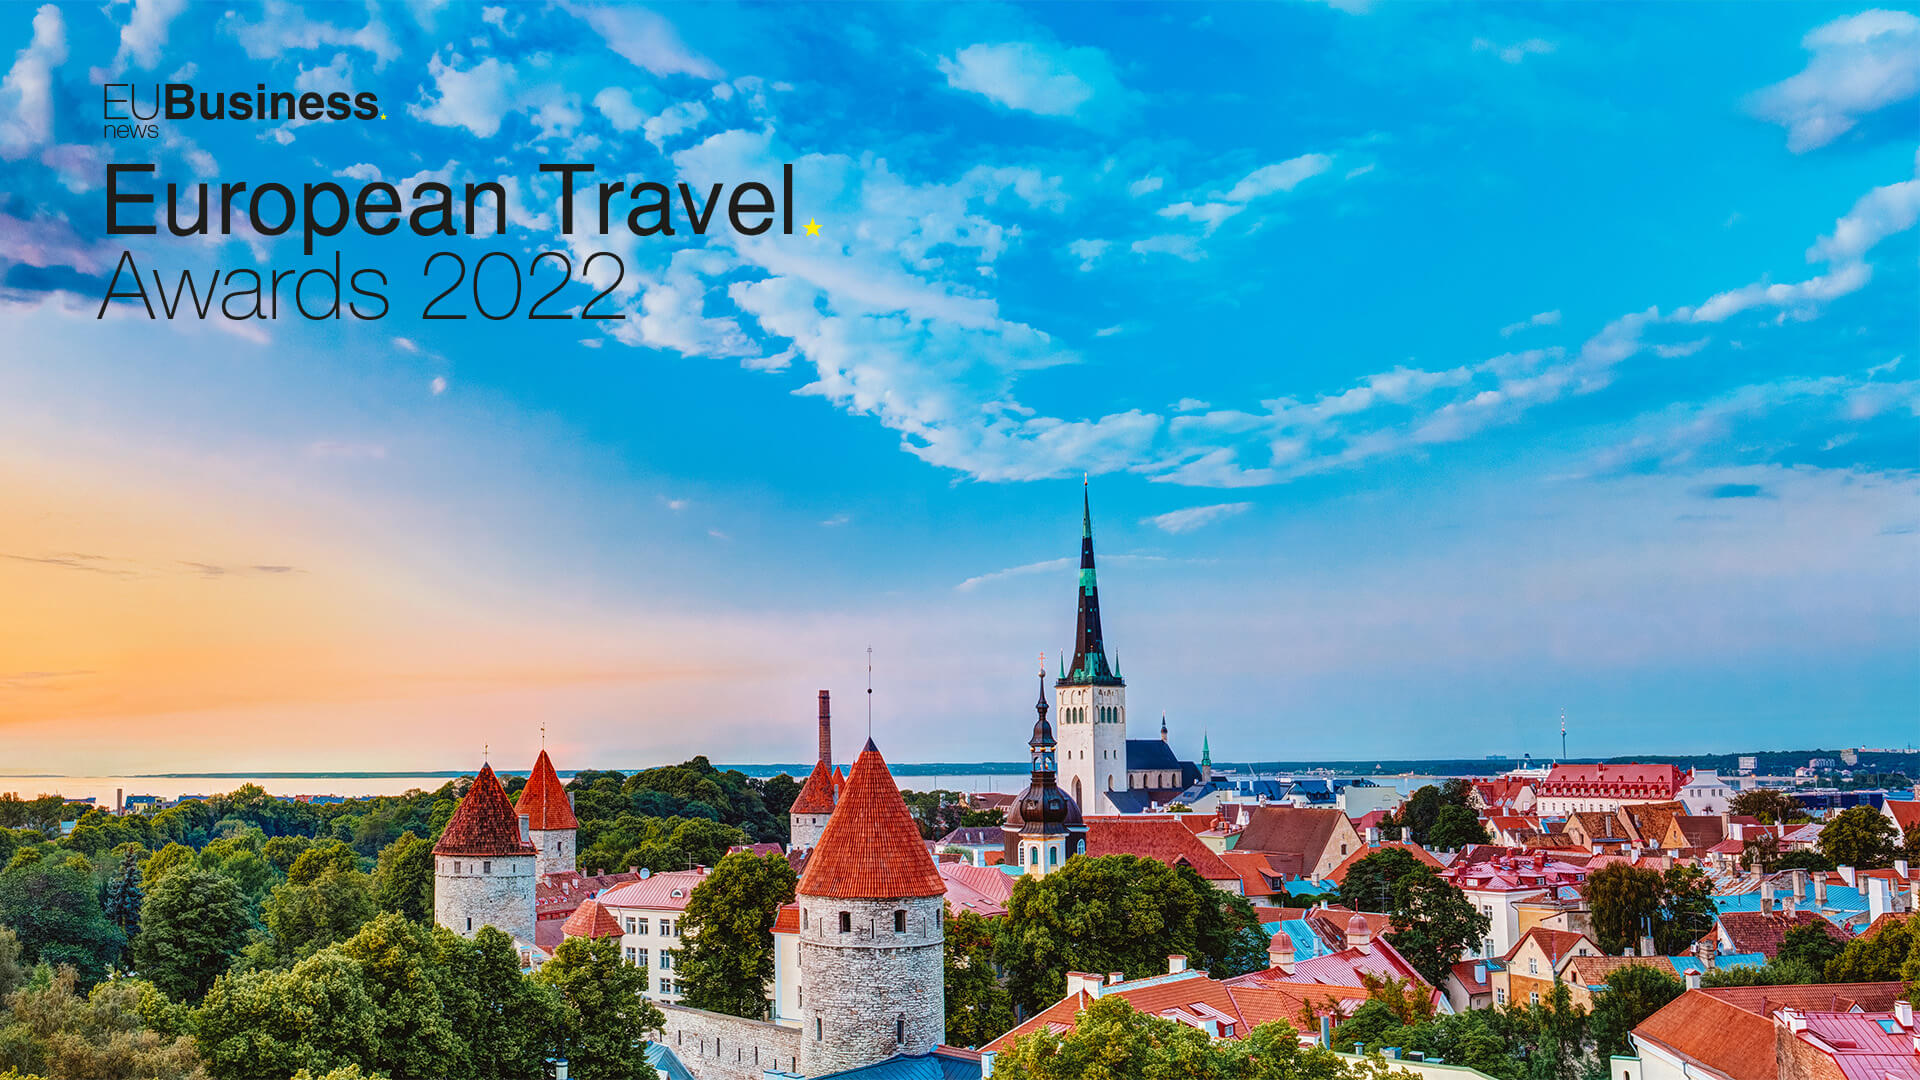 Tallinn, Estonia skyline at sunset. The EU Business News European Travel Awards logo is in the top left corner